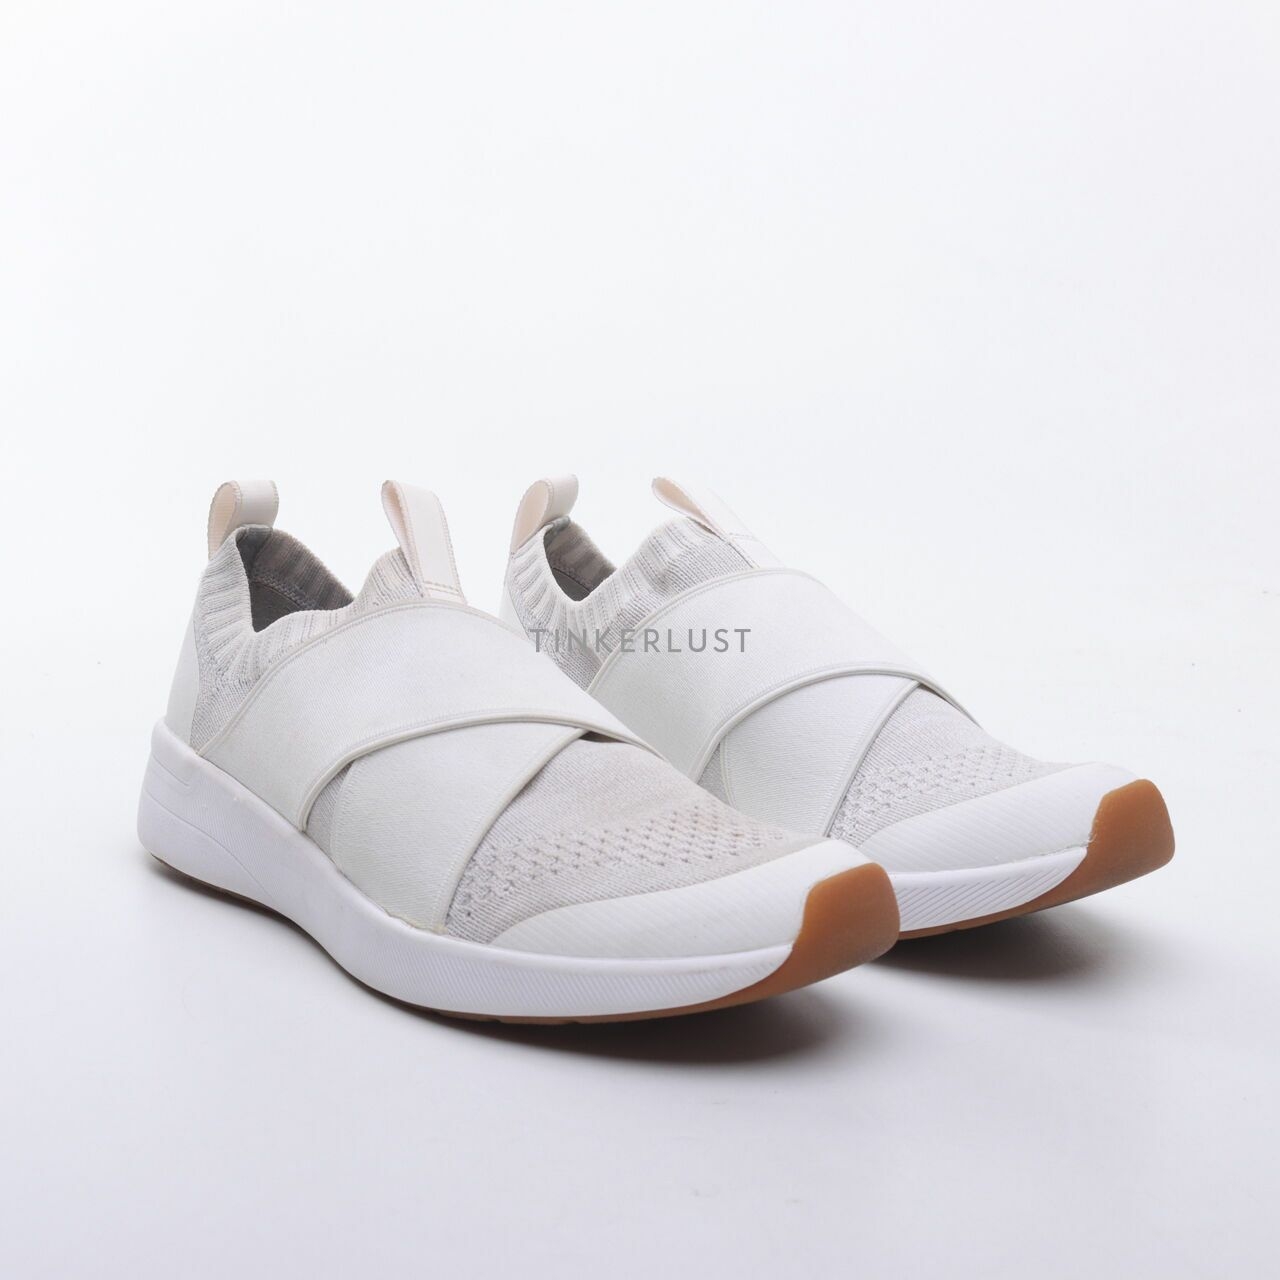 Keds Studio Jumper Engineered Mesh White Sneakers